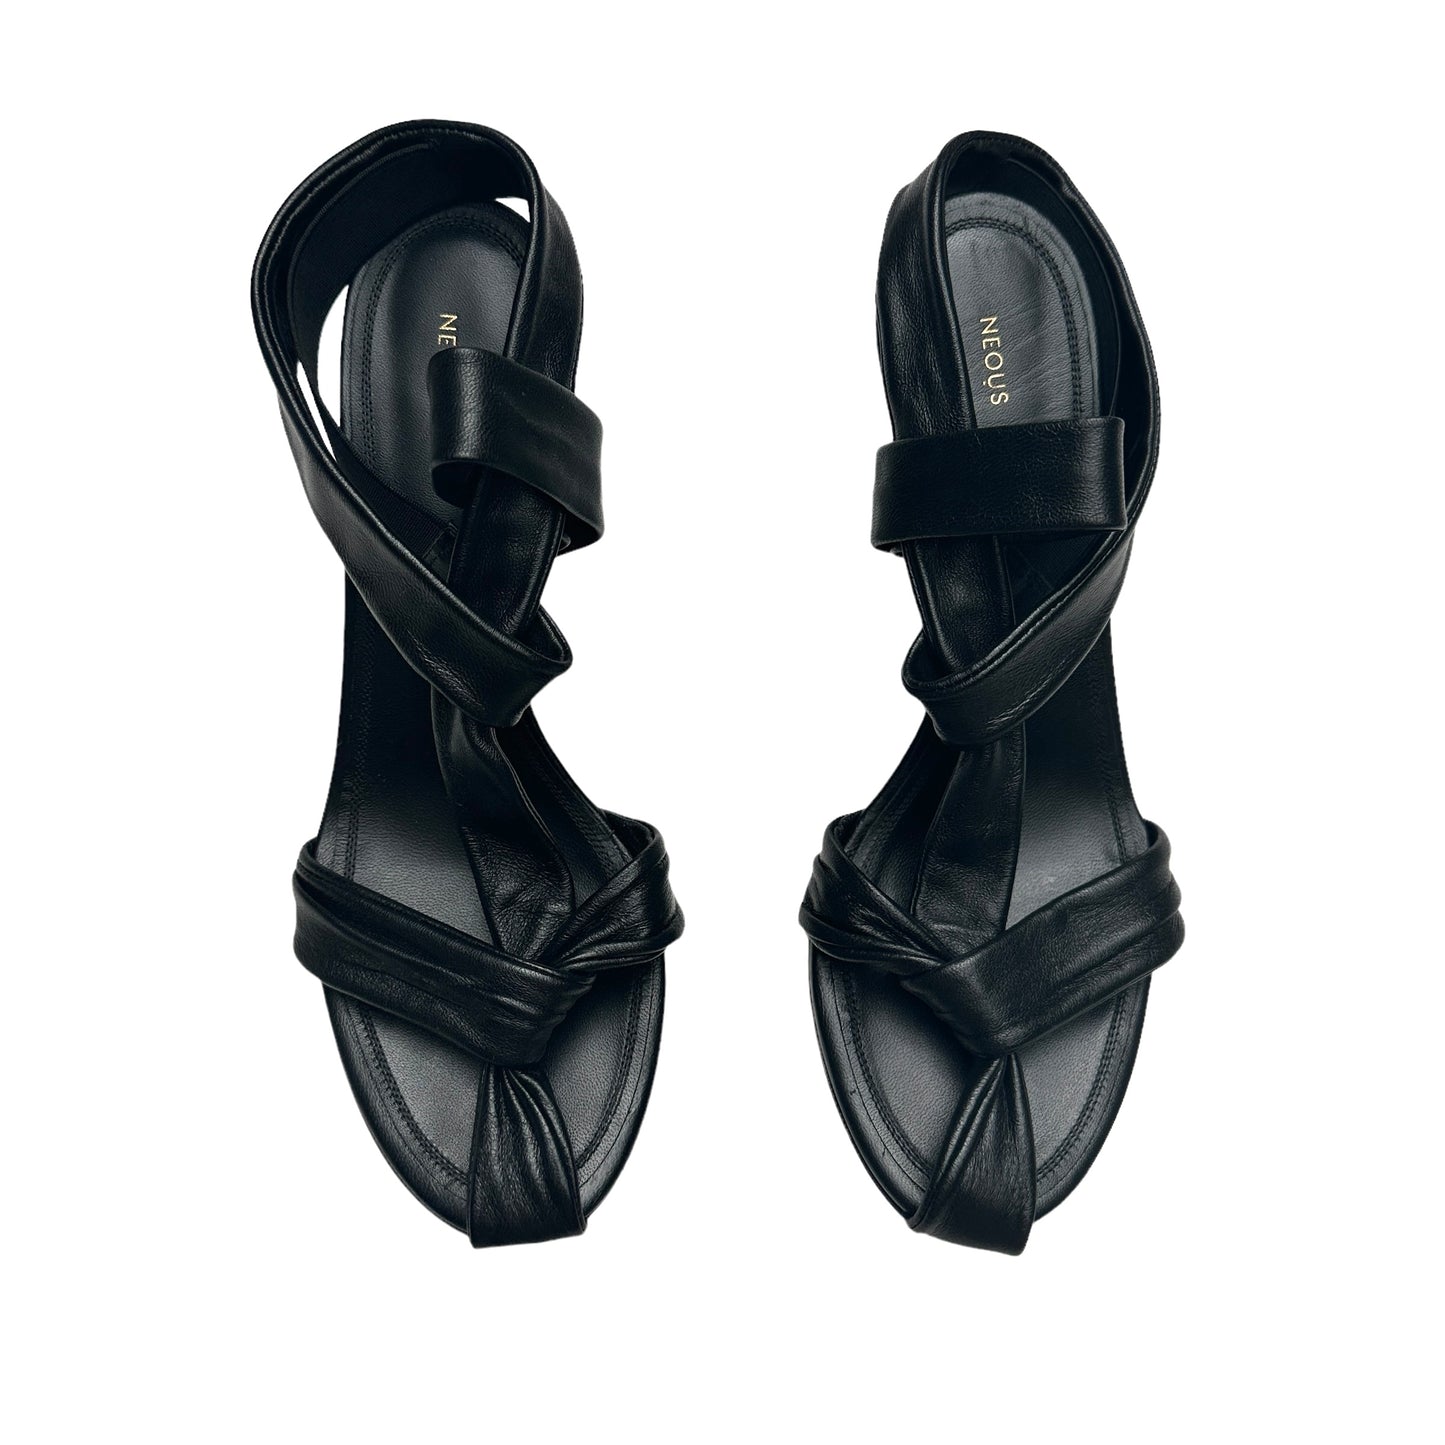 Black Leather Heels - 8